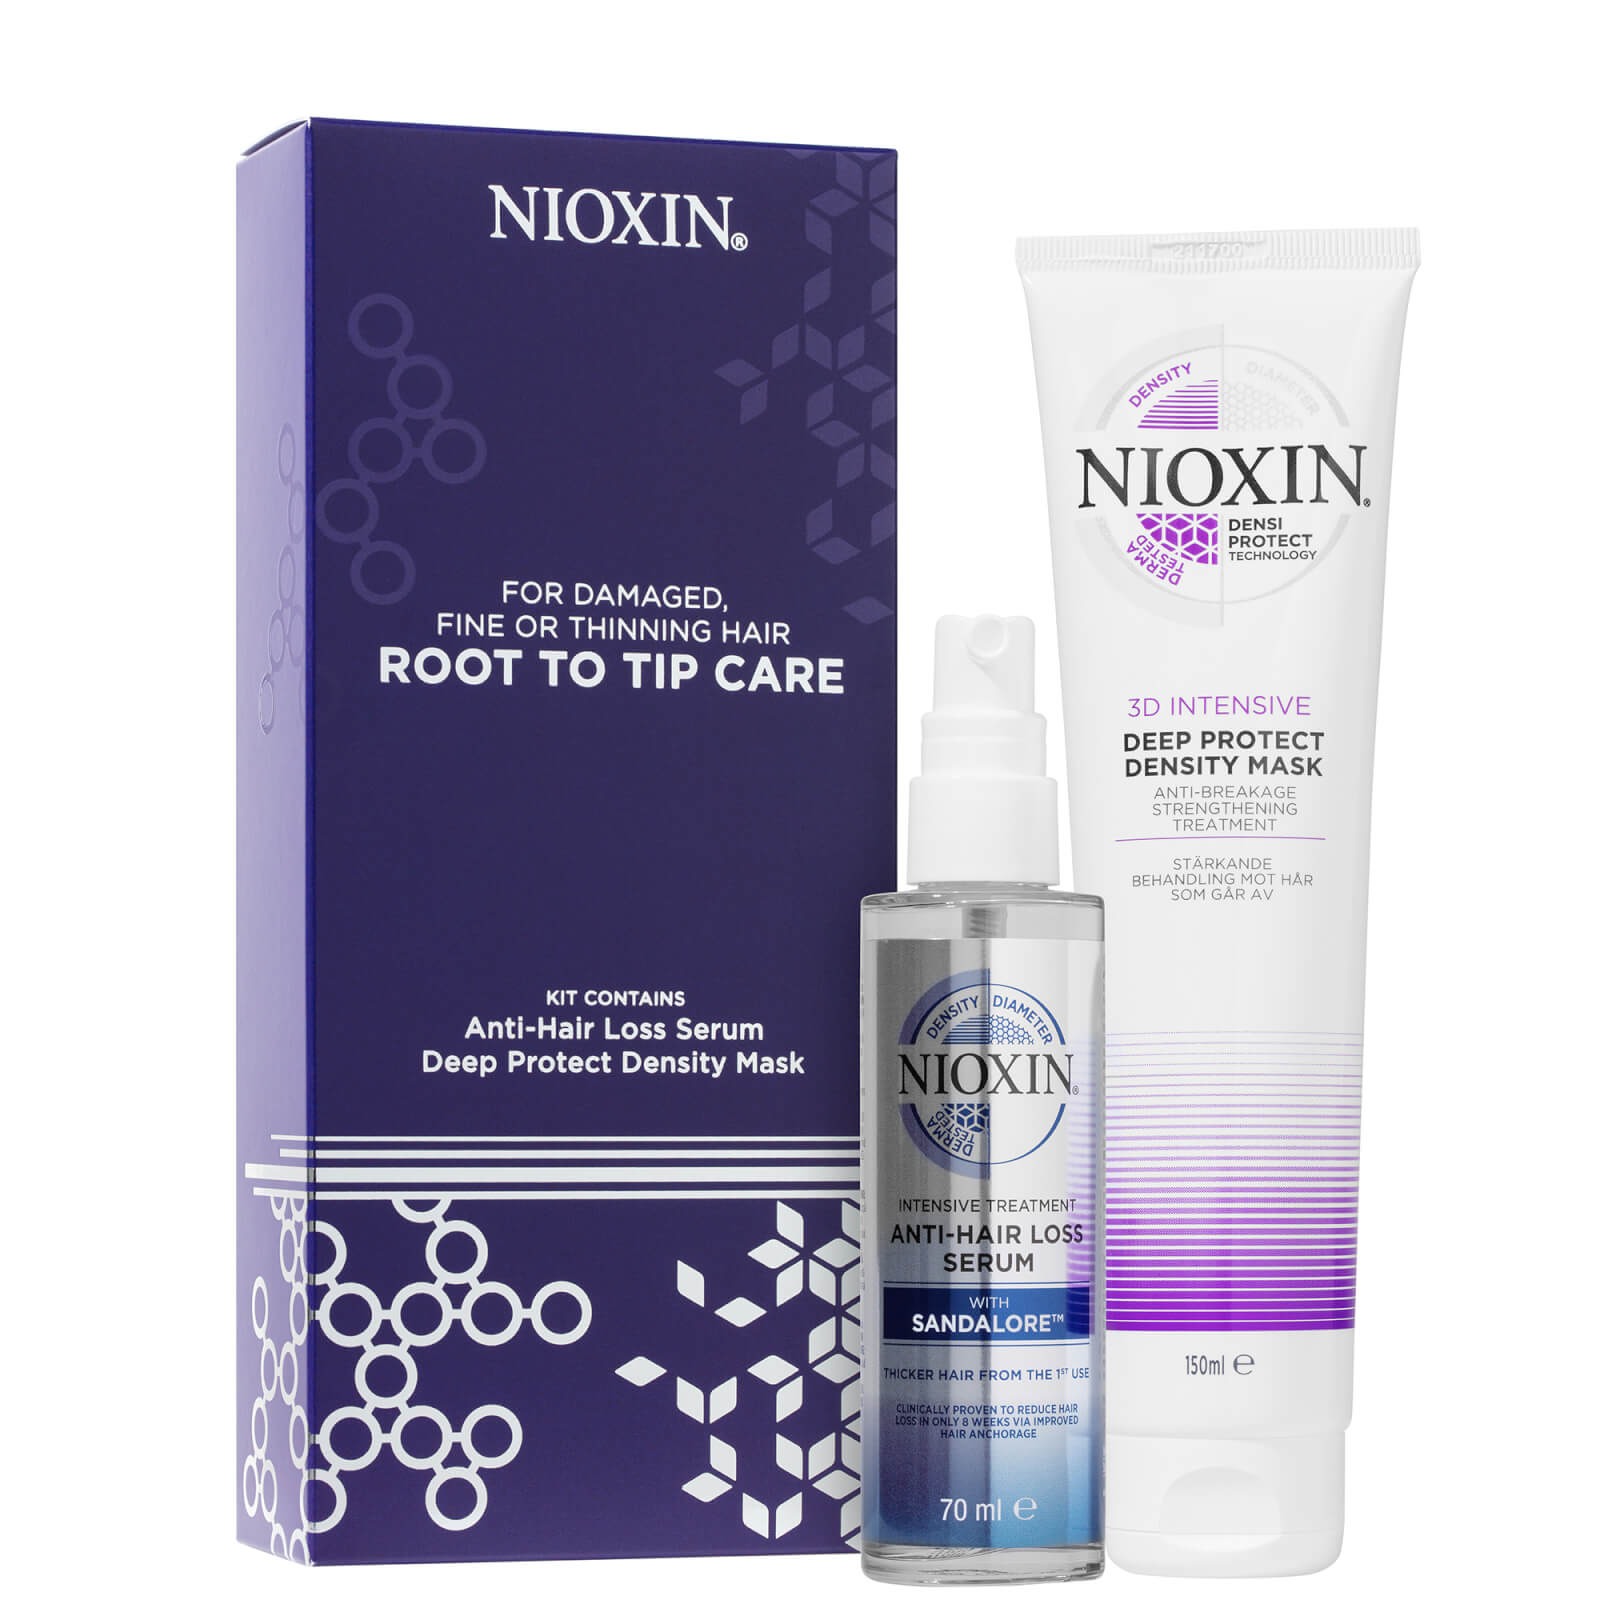 Nioxin Intensive Treatment Duo - Anti Hair Loss Serum And Deep Repair Mask In White